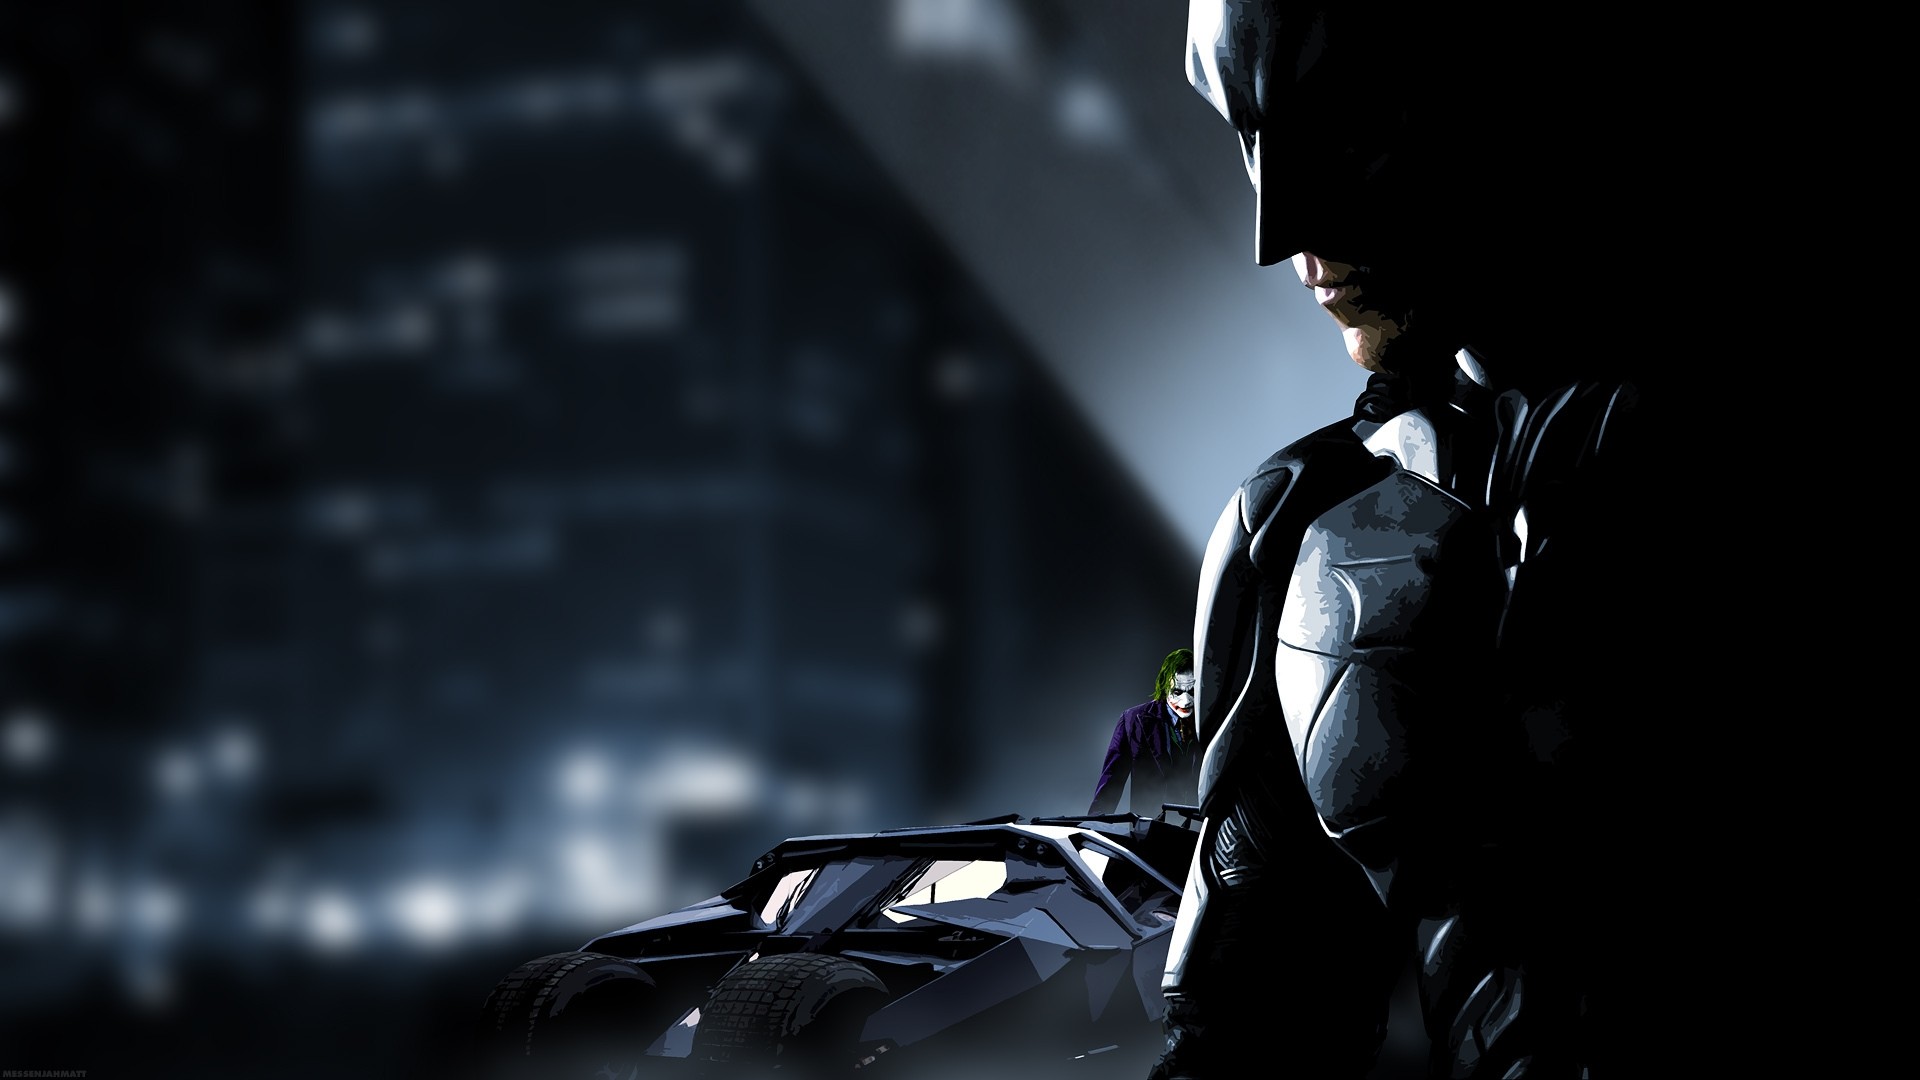 General 1920x1080 Batman The Dark Knight Batmobile Joker Christian Bale movies vehicle actor superhero DC Comics Warner Brothers Christopher Nolan